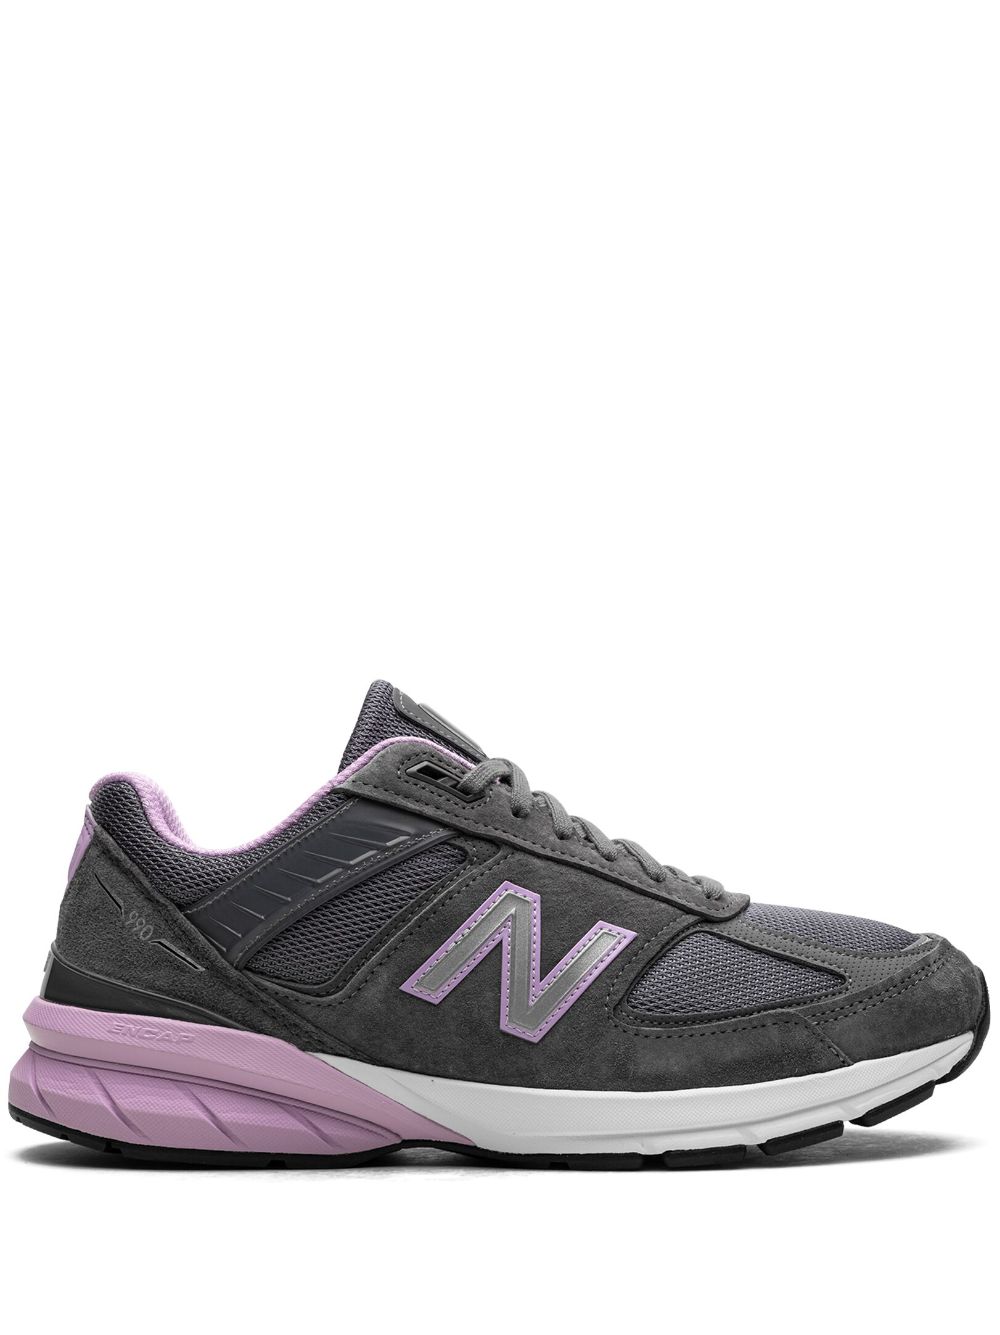 New Balance 990v5 "MiUSA Lead Dark Violet Glow" sneakers - Grey